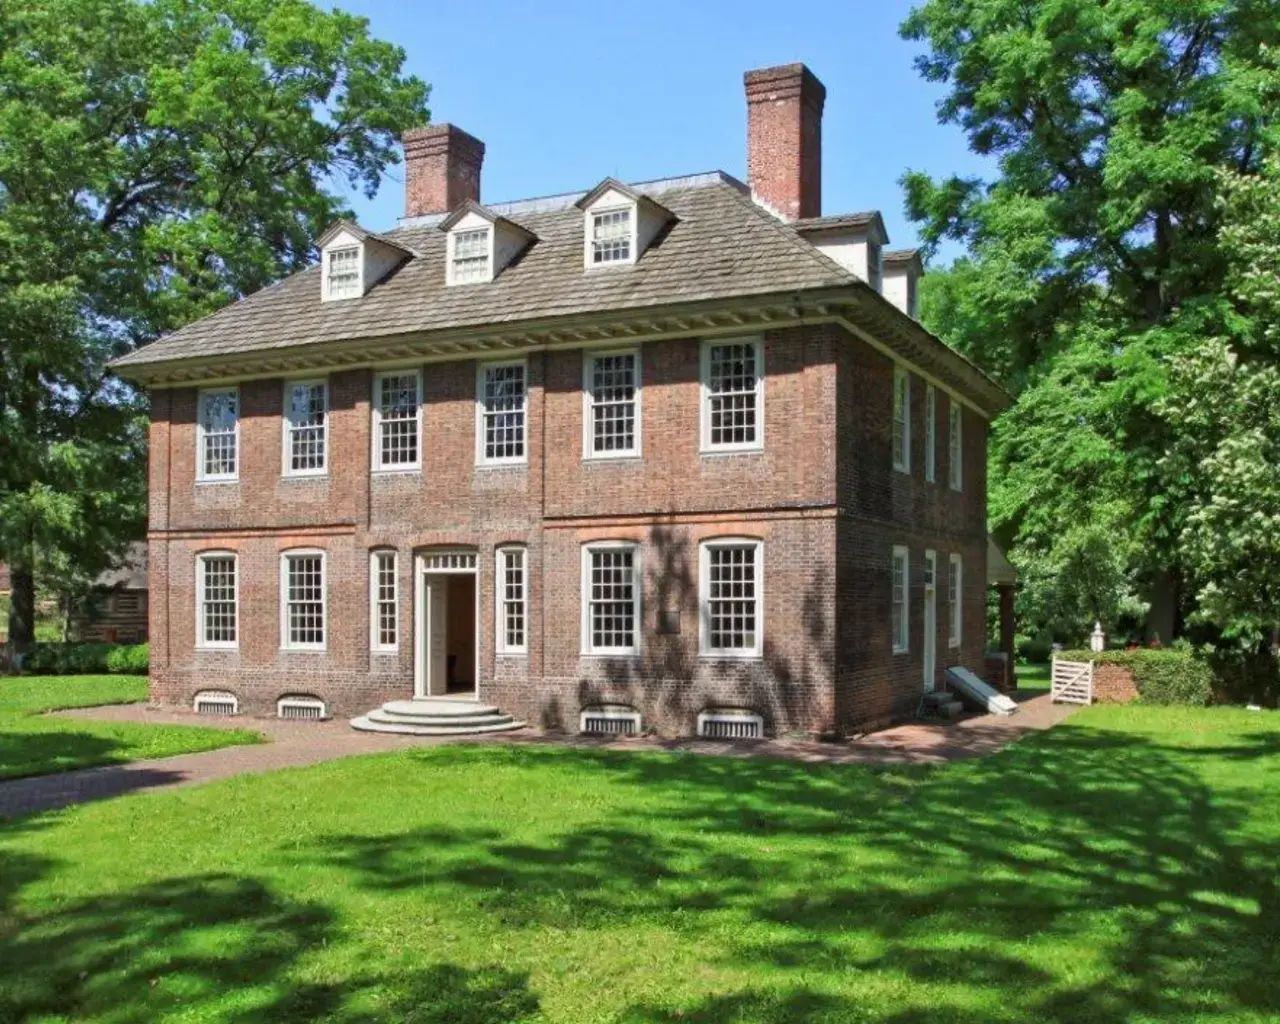 Stenton, the home of William Penn’s Secretary, James Logan, 1730. Photo by Jim Garrison, 2012.